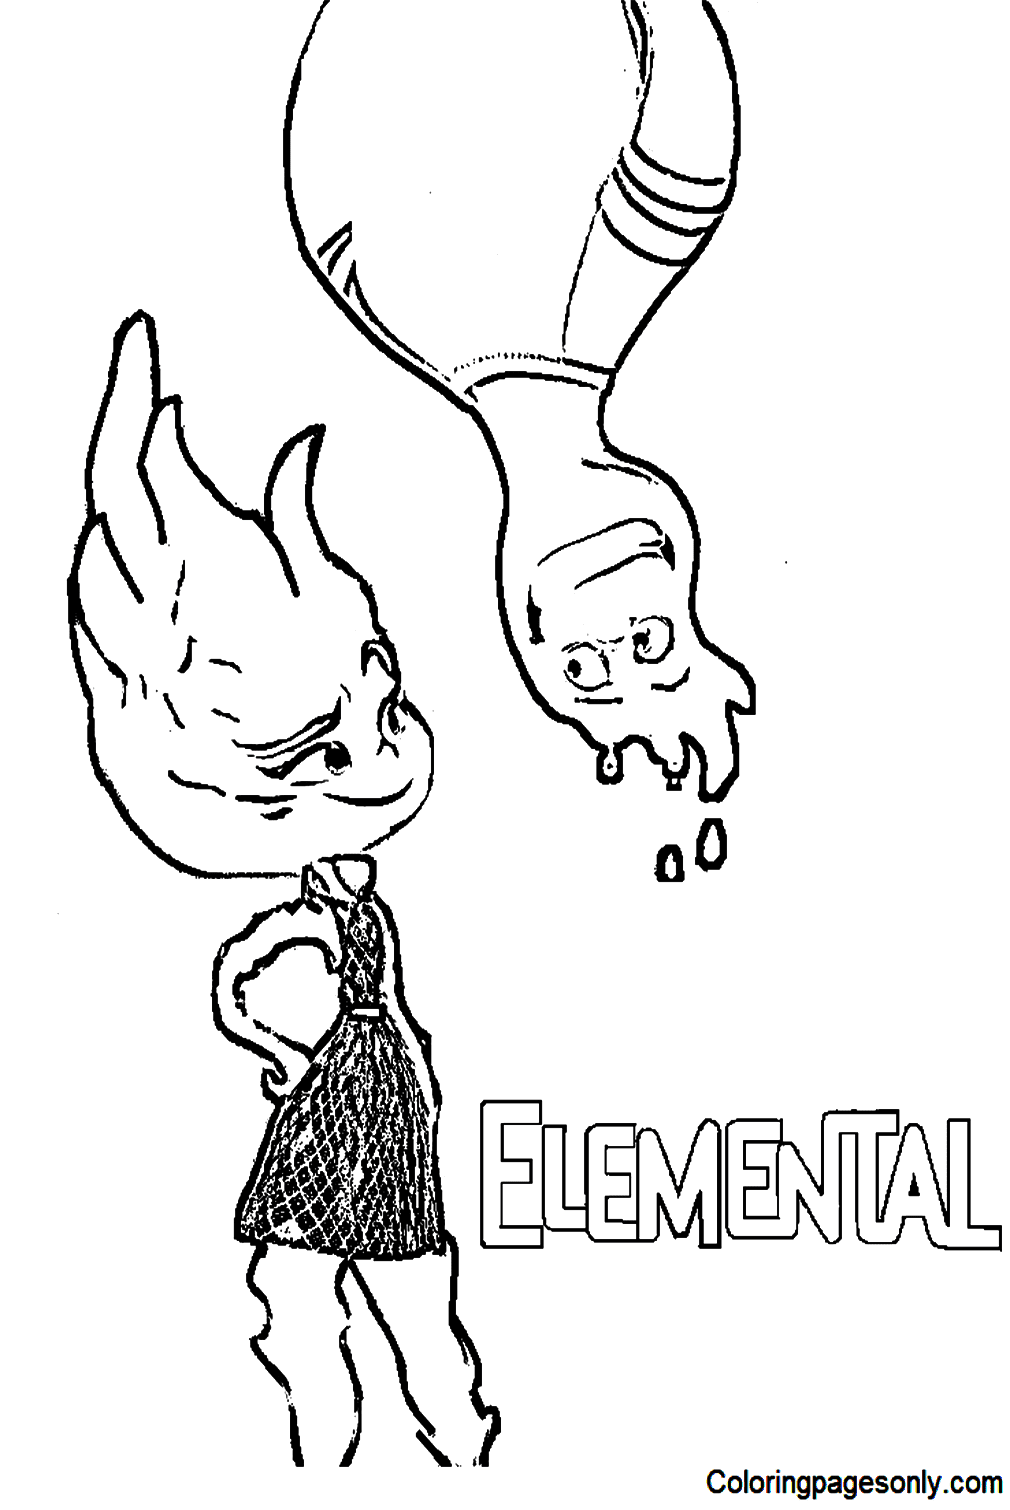 Elemental 的 Ember 和 Wade